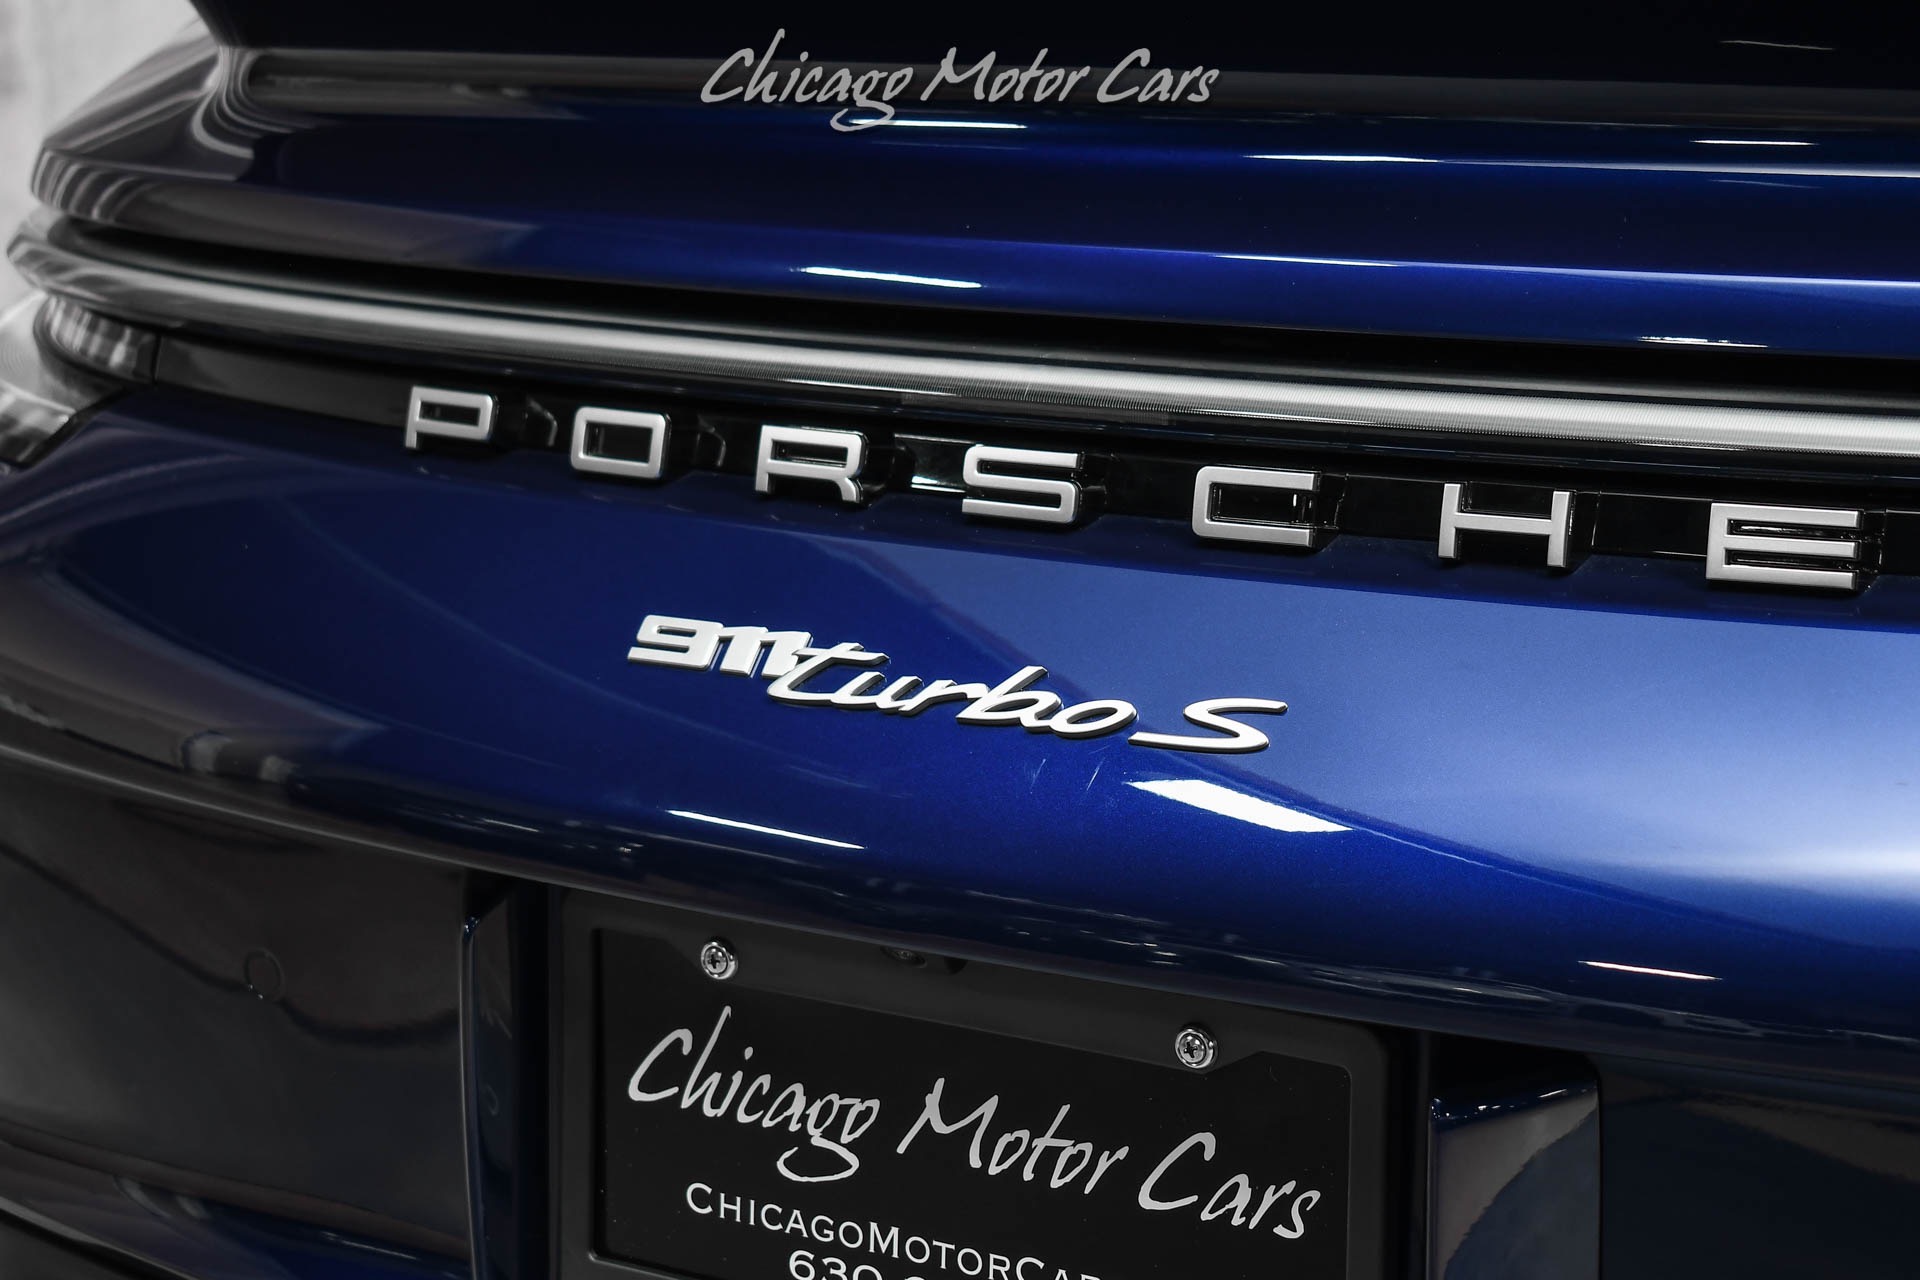 Used-2022-Porsche-911-Turbo-S-Cabriolet-Only-1900-Miles-MSRP-281k-HARD-LOADED-Gentian-Blue-Metallic